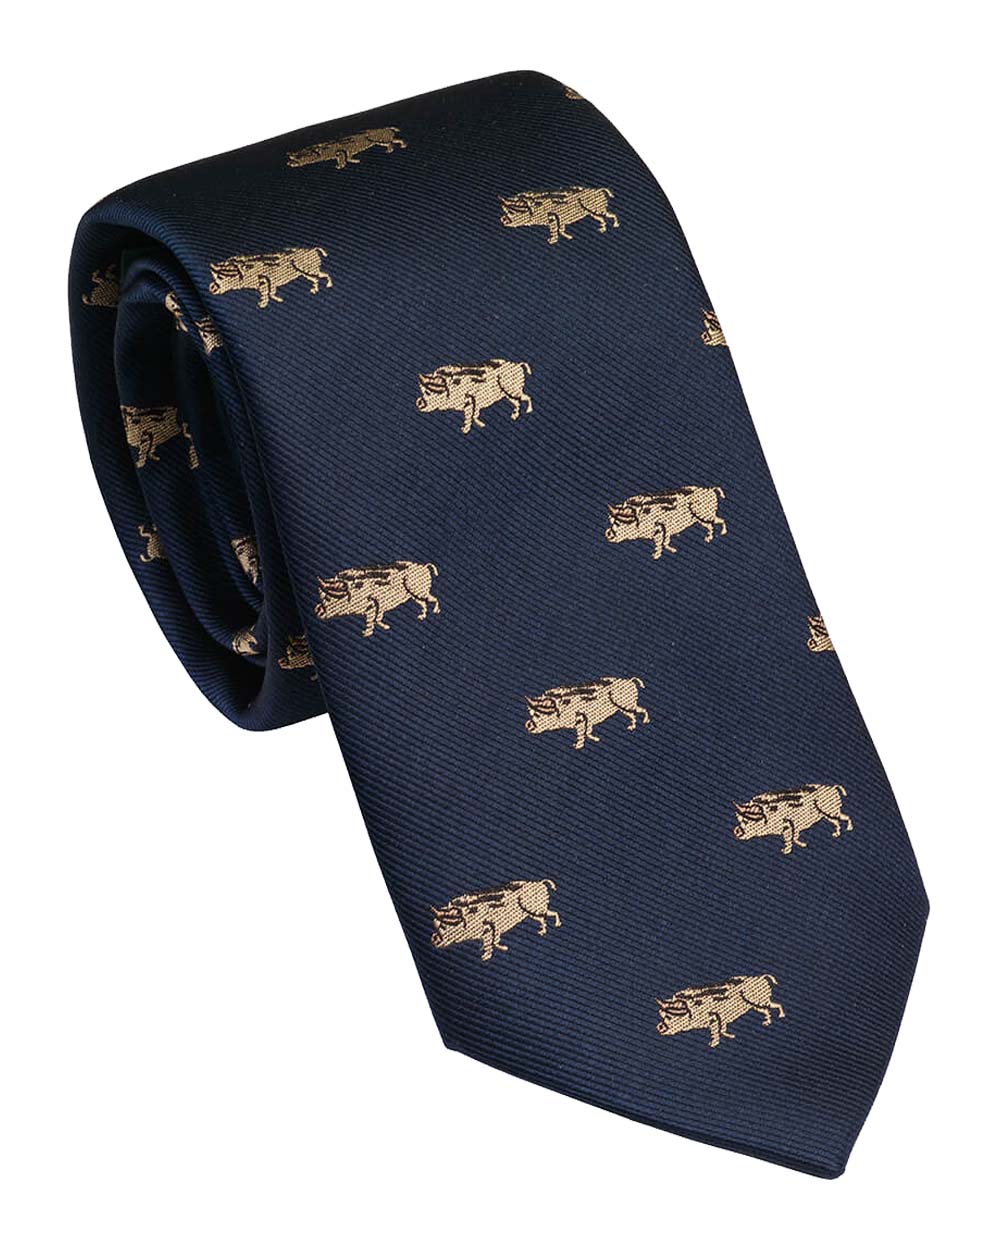 Old Navy coloured Laksen Wild Boar Tie on White background 